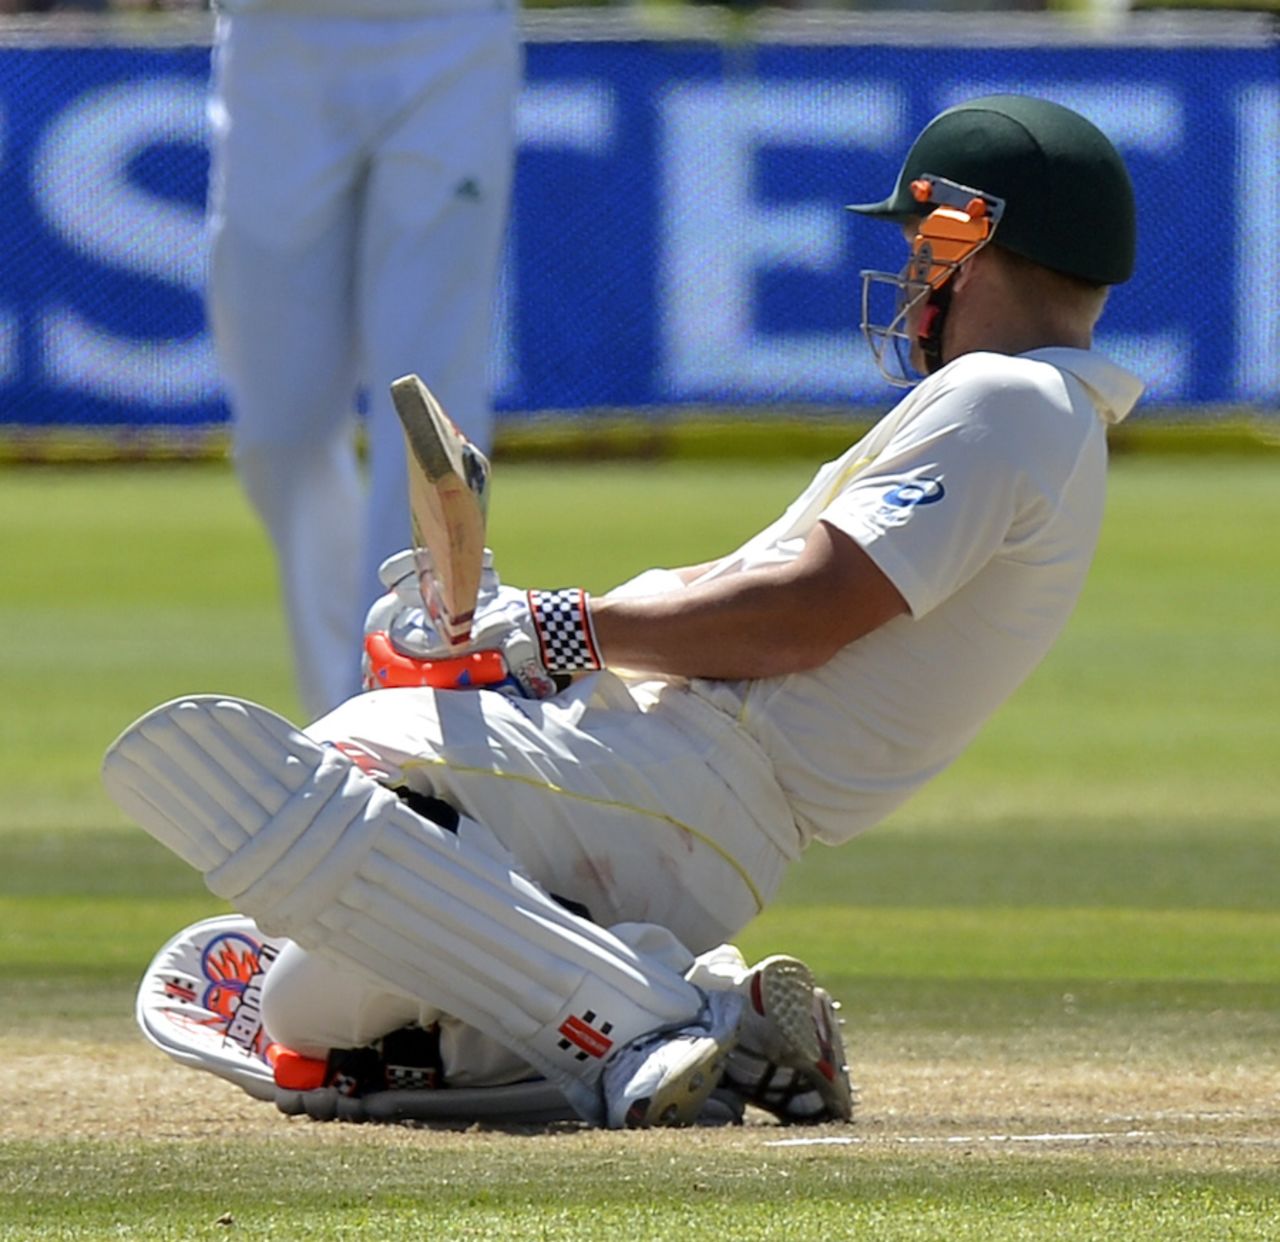 David Warner ducks under a bouncer, South Africa v Australia, 2nd Test, Port Elizabeth, 4th day, February 23, 2014